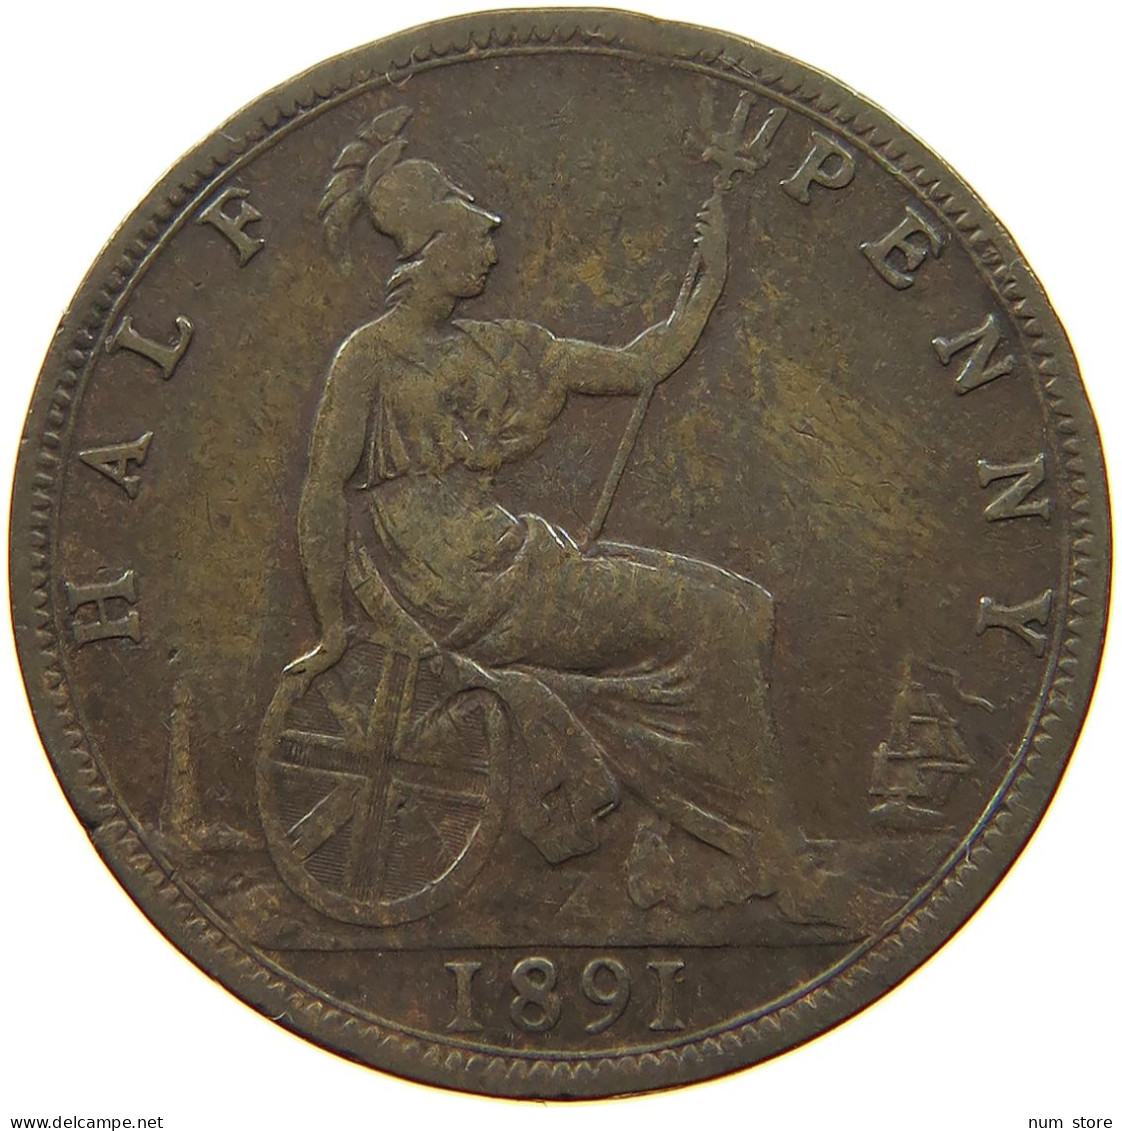 GREAT BRITAIN HALFPENNY 1891 Victoria 1837-1901 #s050 0153 - C. 1/2 Penny